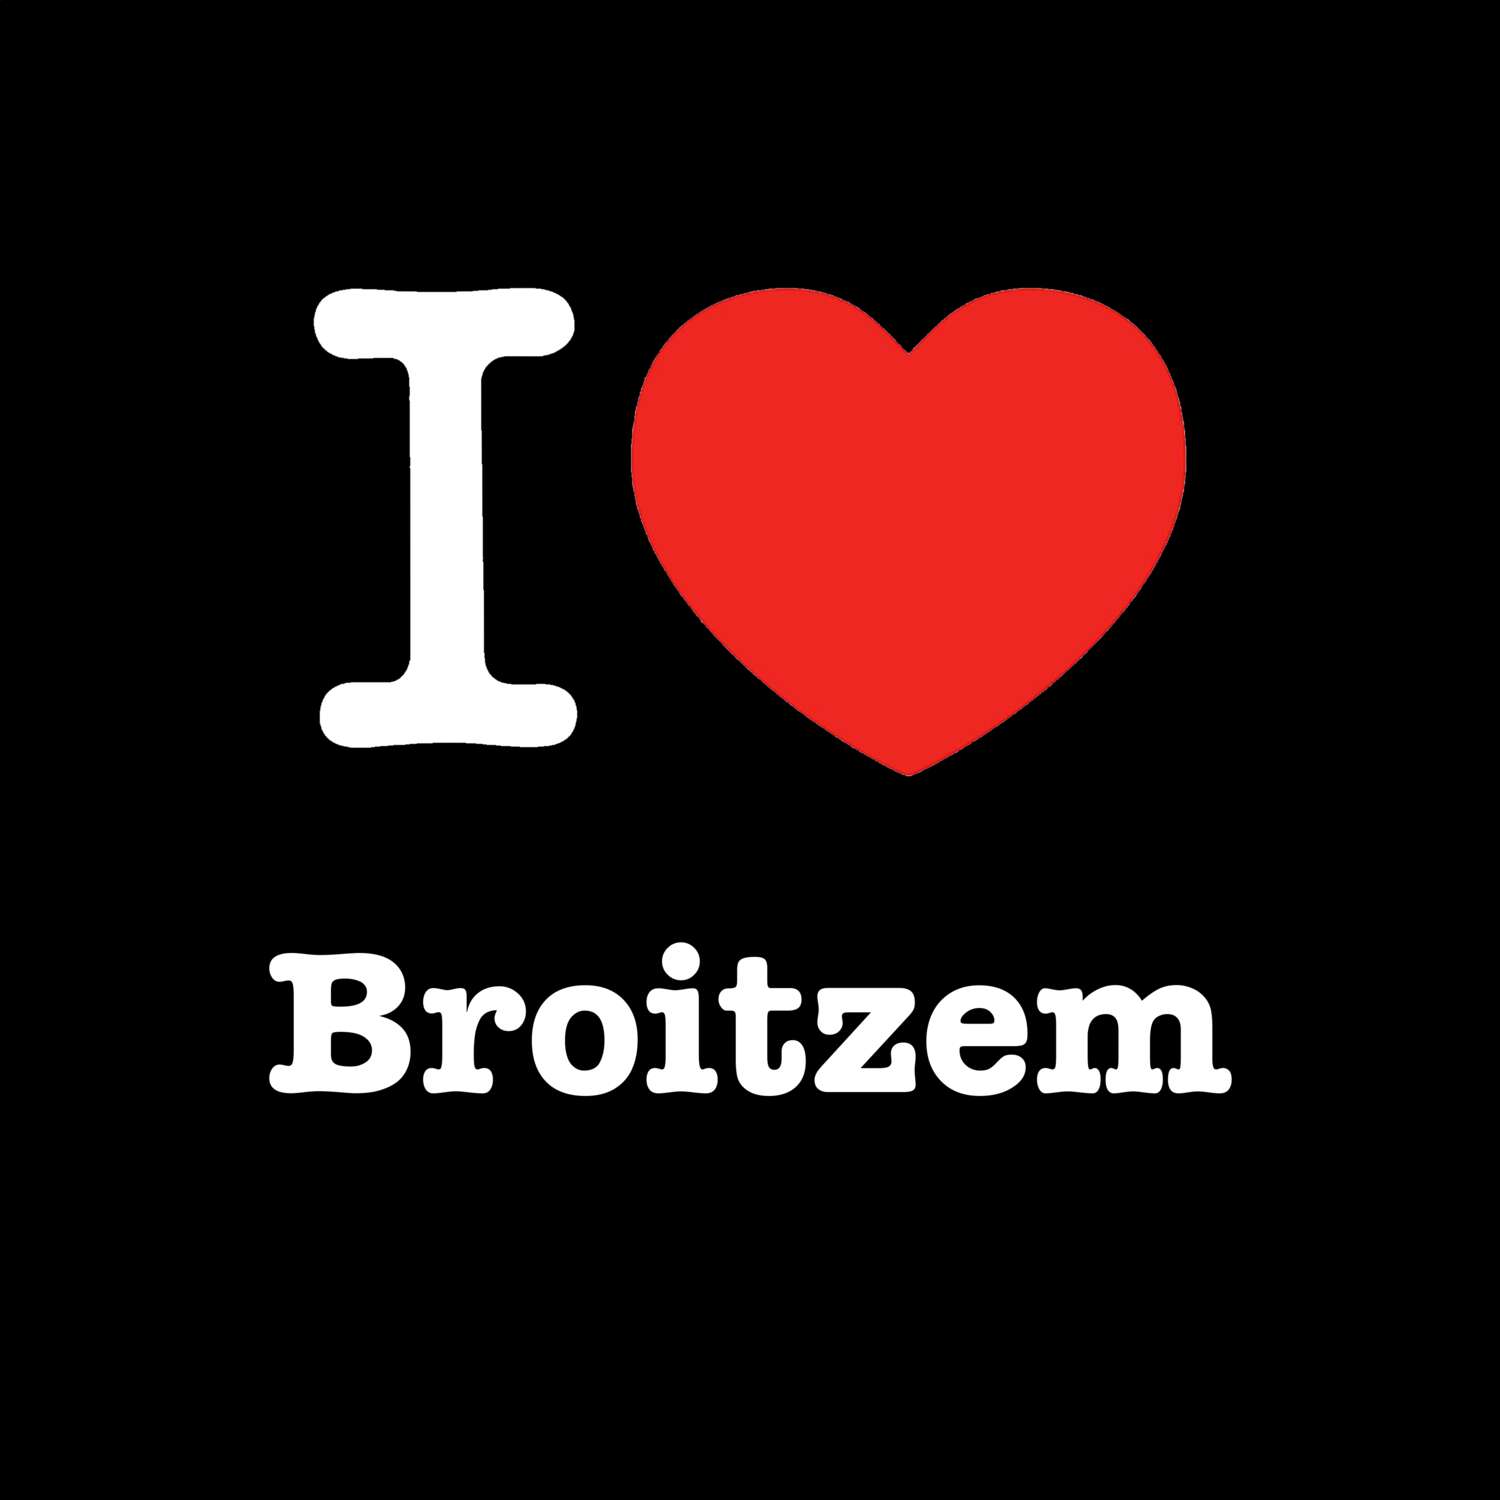 Broitzem T-Shirt »I love«